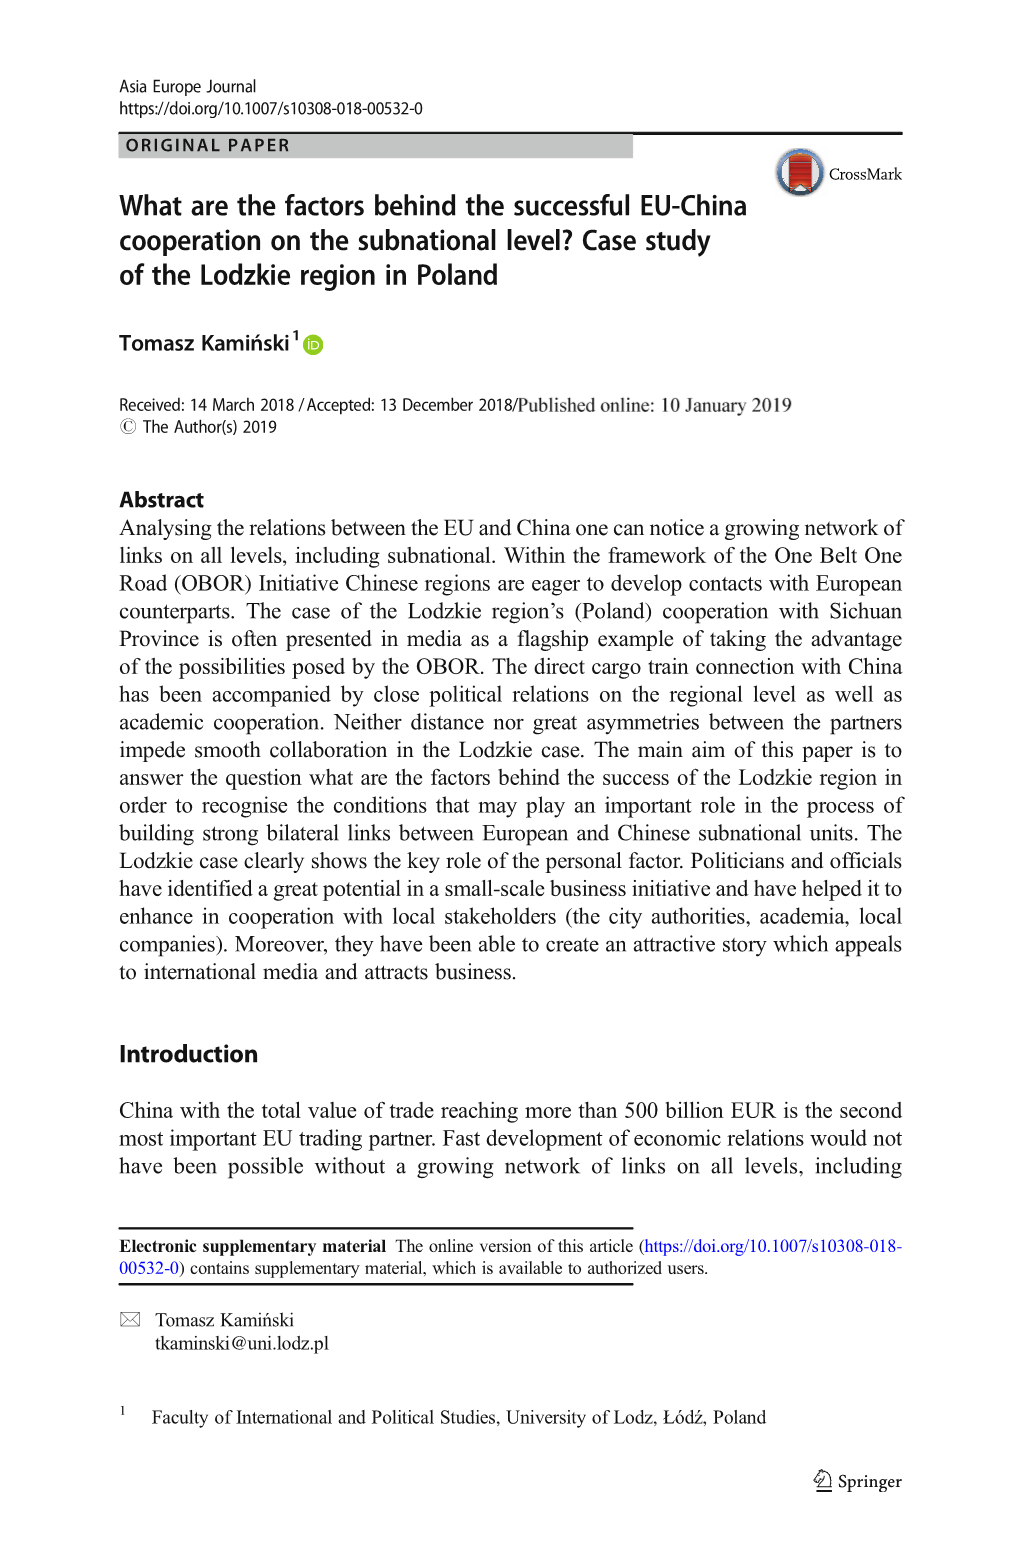 Case Study of the Lodzkie Region in Poland